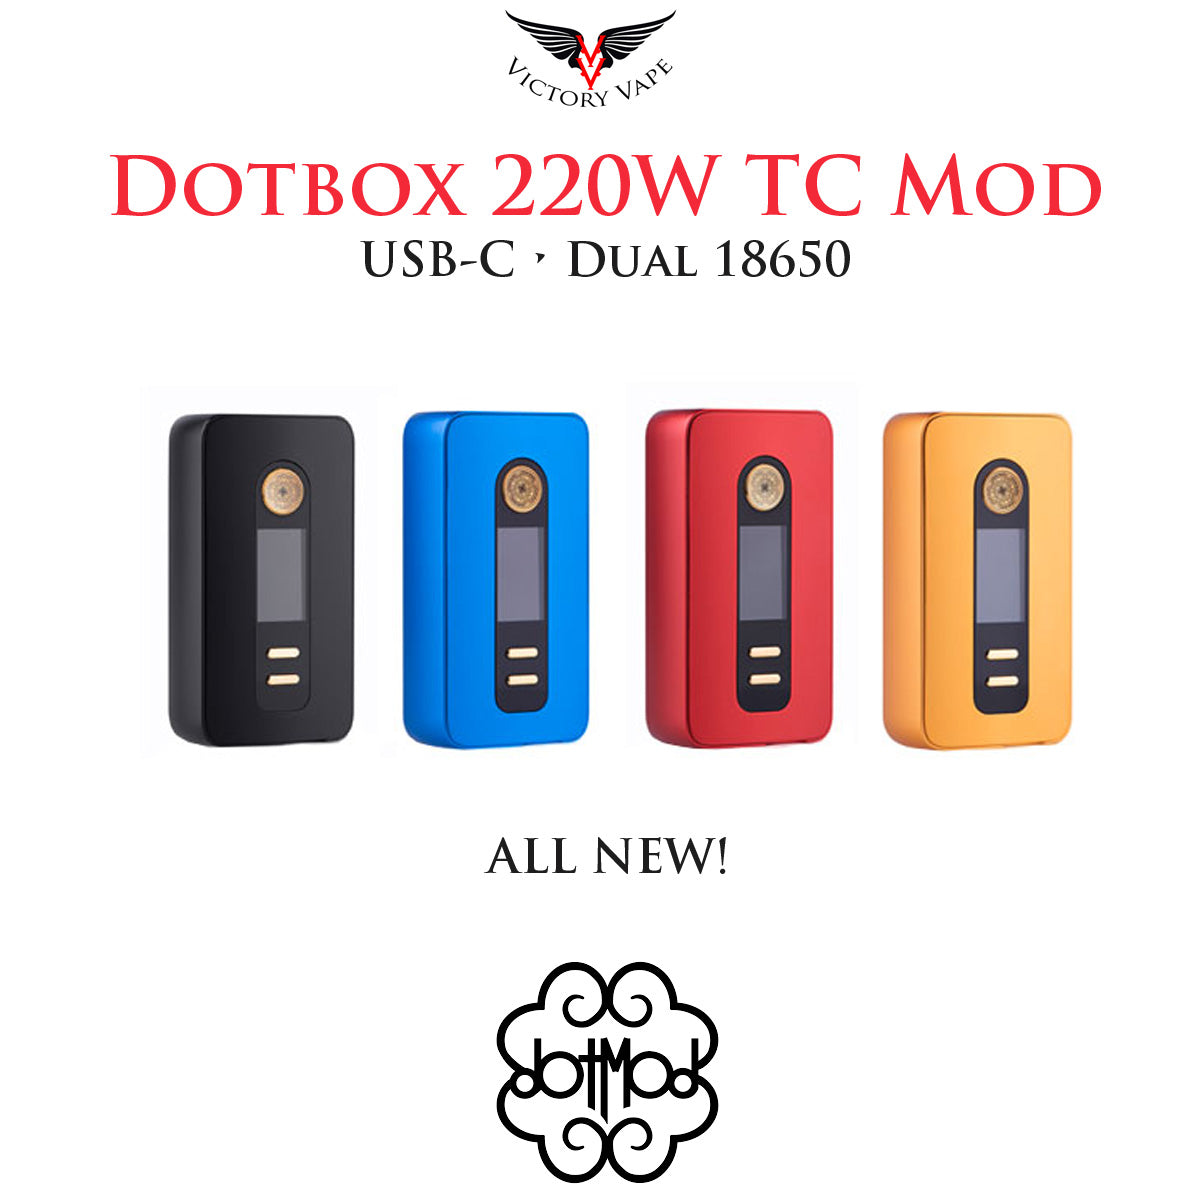  dotmod dotBox 220W vv/vw Mod • USB-C dual 18650 (not included) 